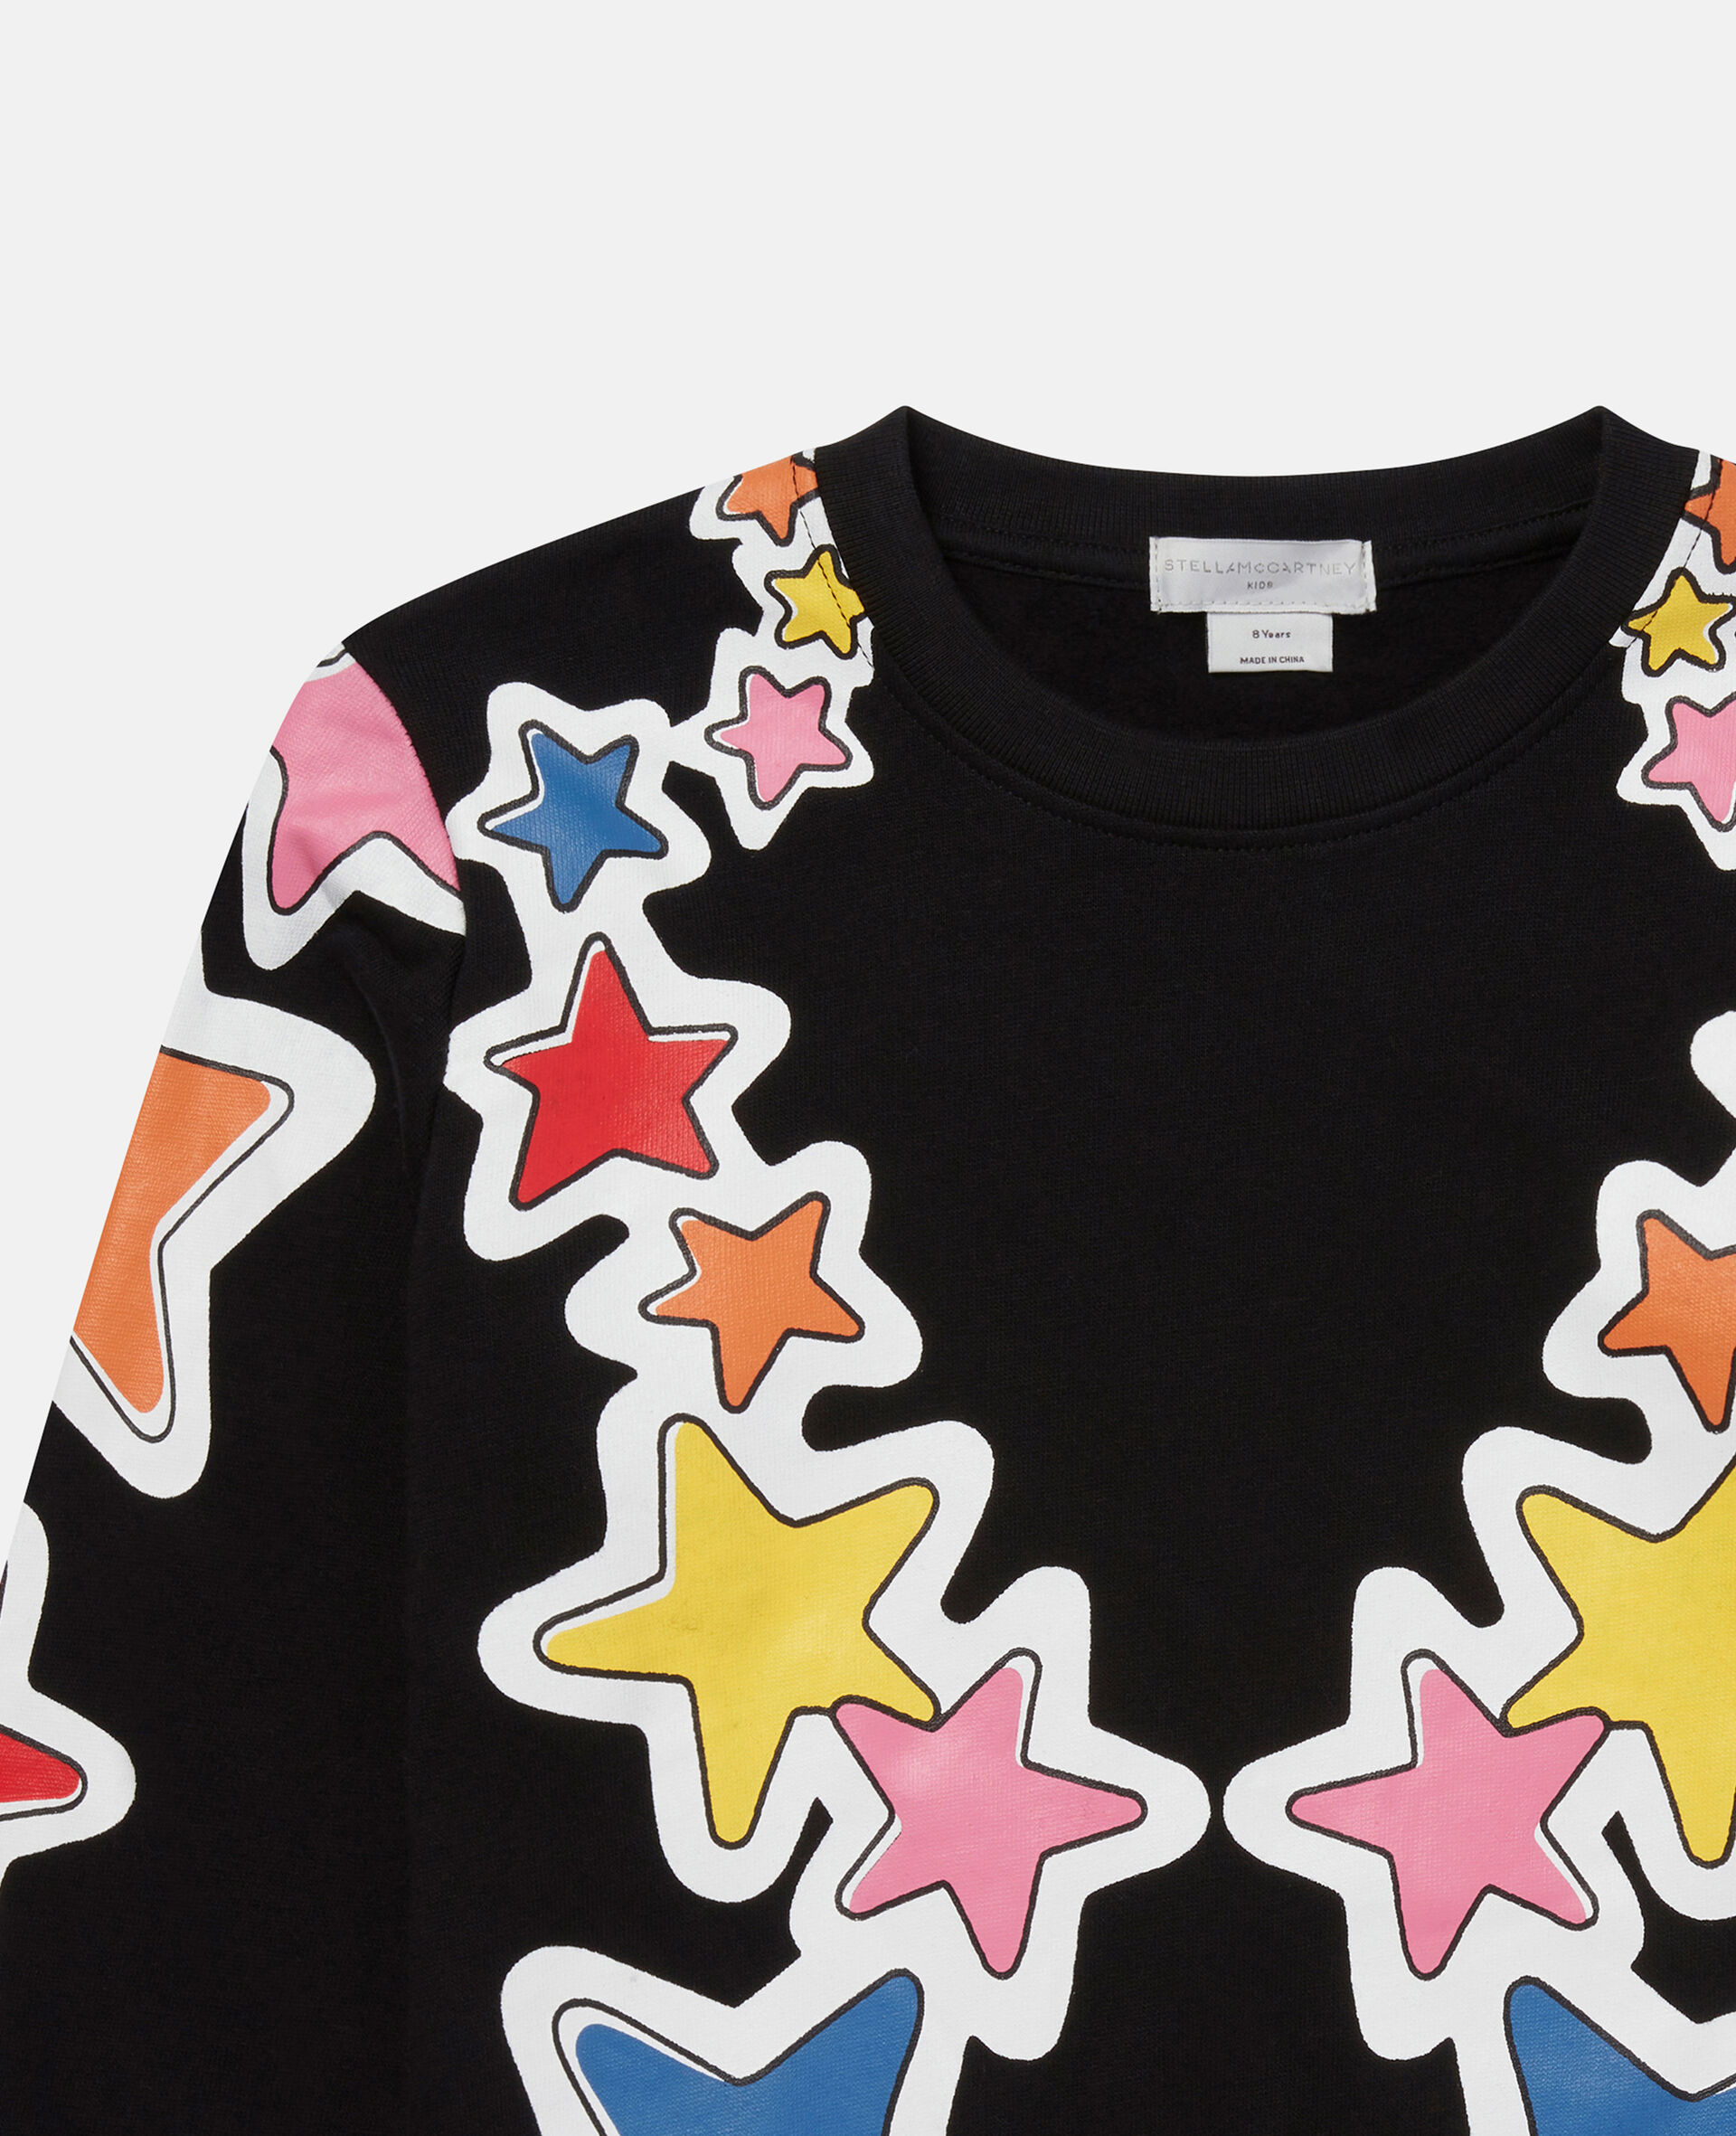 Cosmic Star Print Fleece Sweatshirt-Black-large image number 1